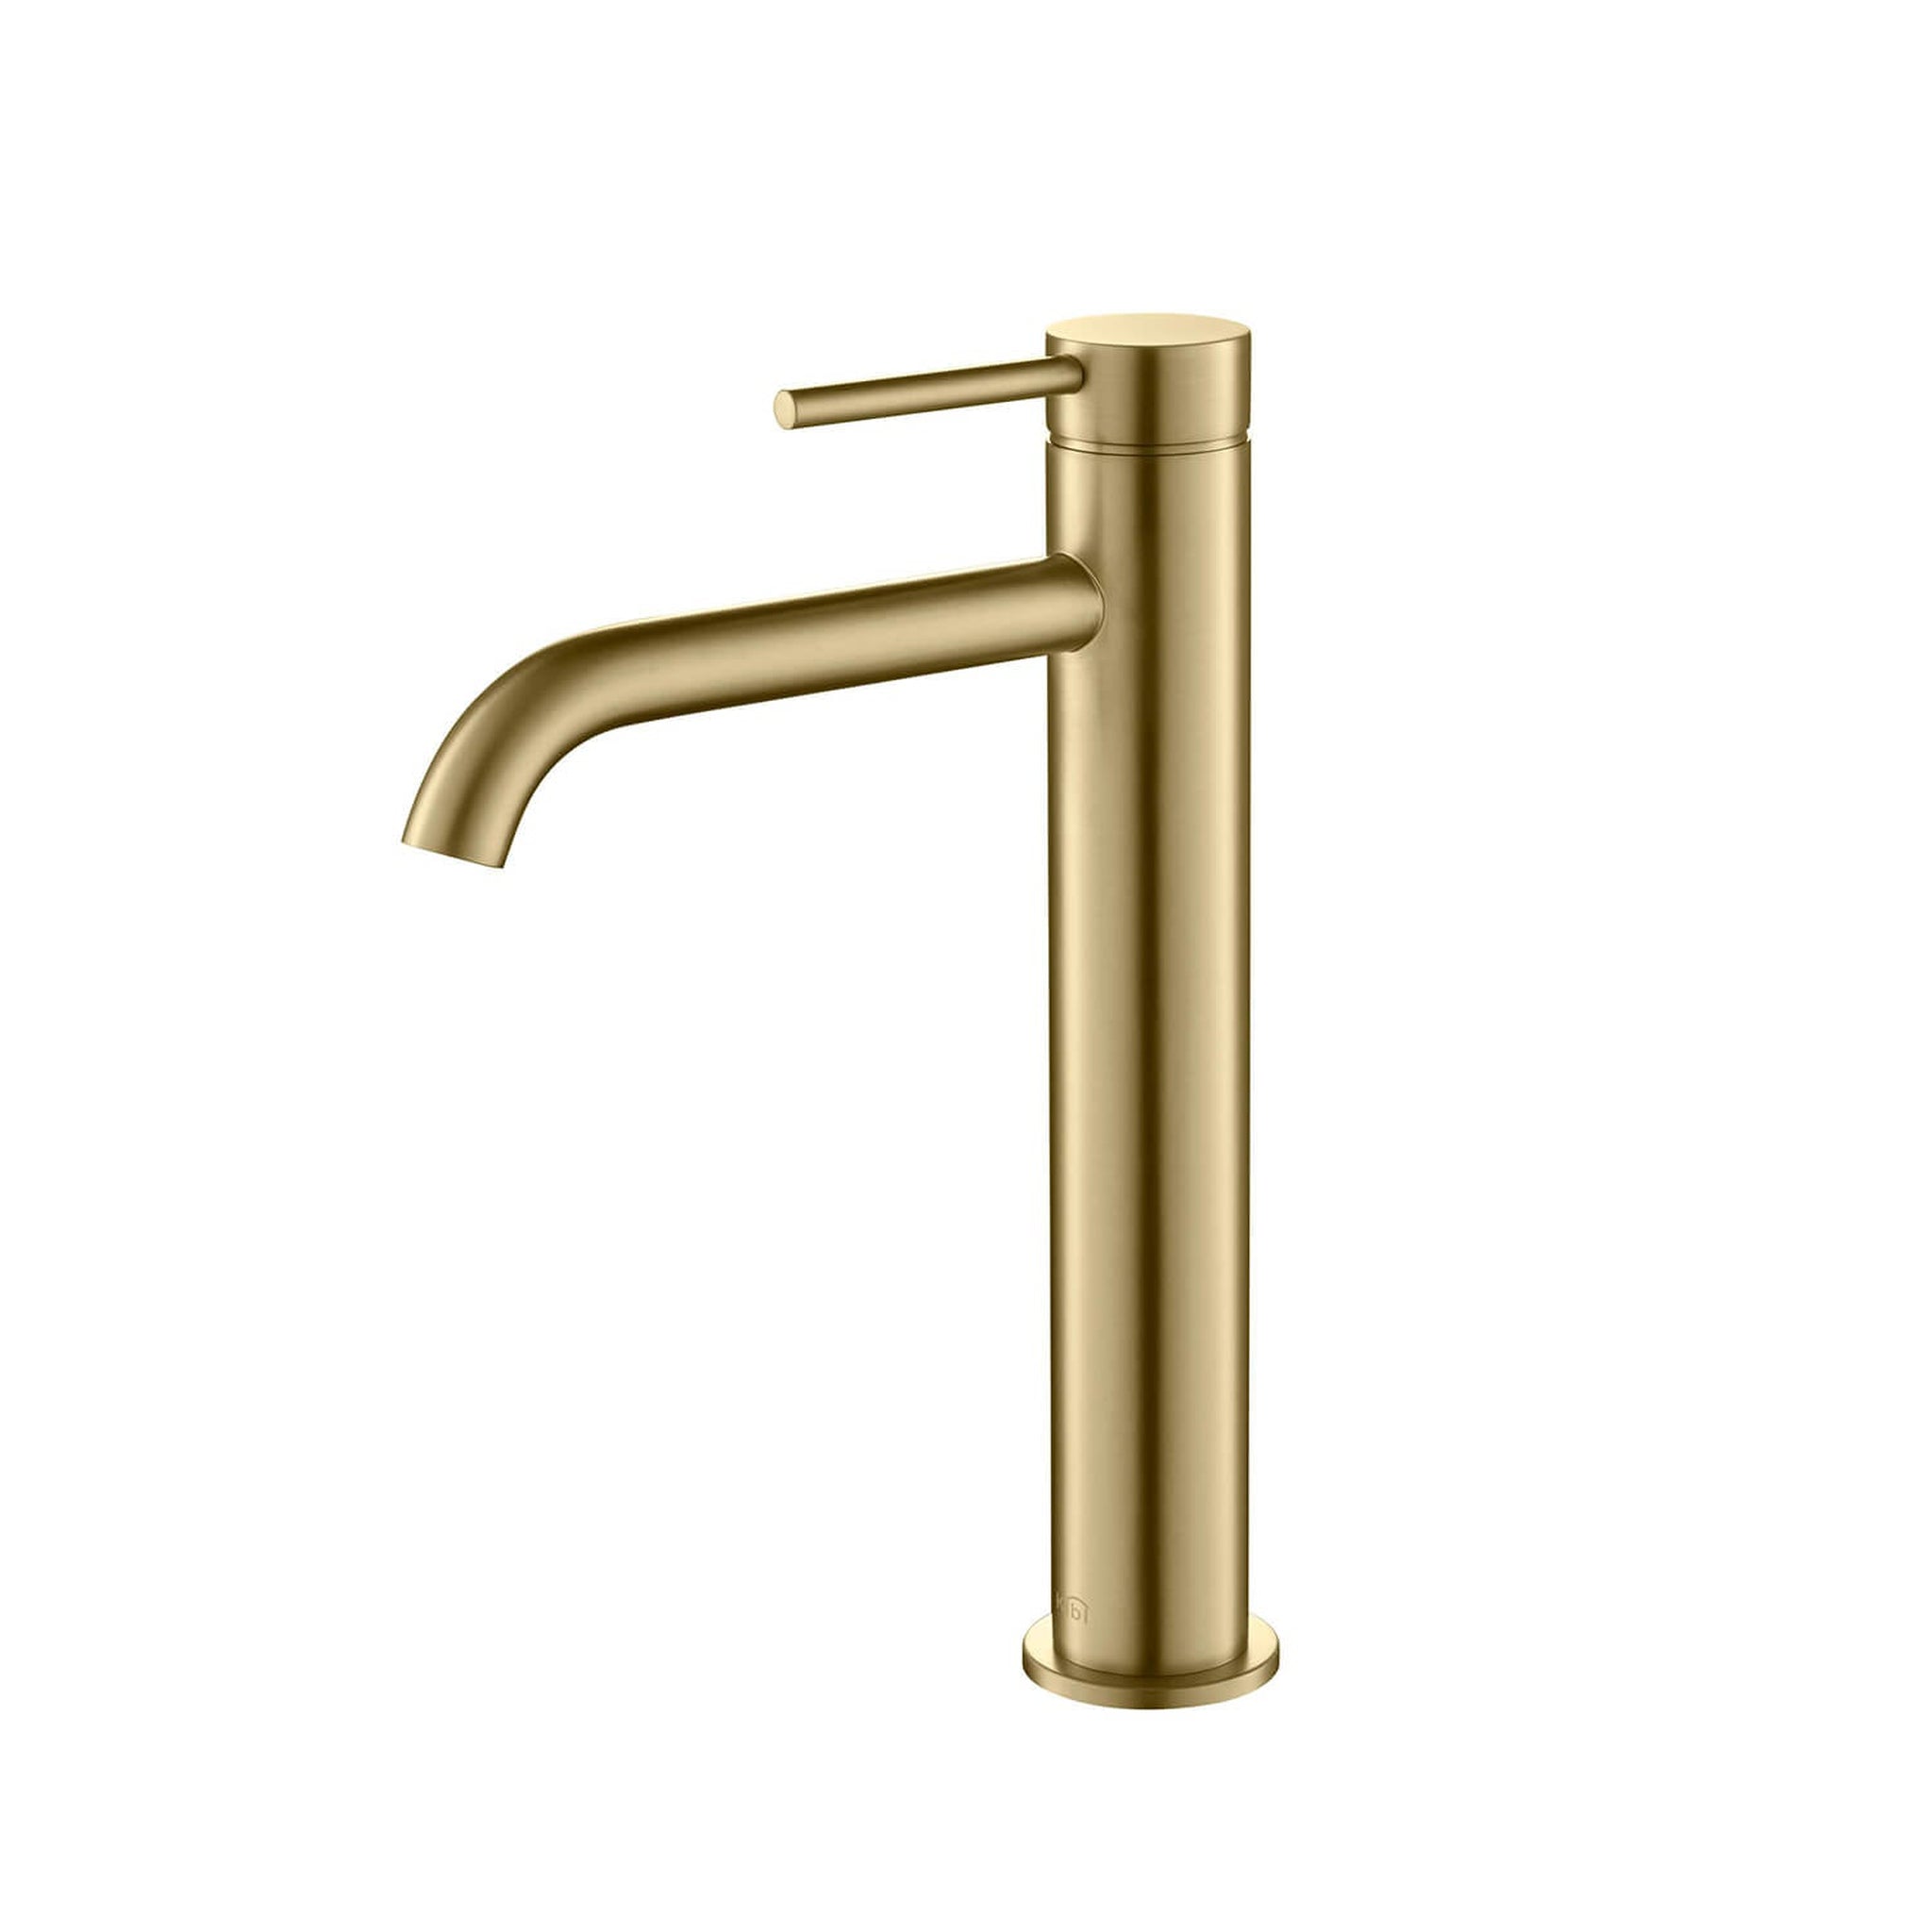 KIBI, KIBI Circular Single Handle Brushed Gold Solid Brass Bathroom Vessel Sink Faucet